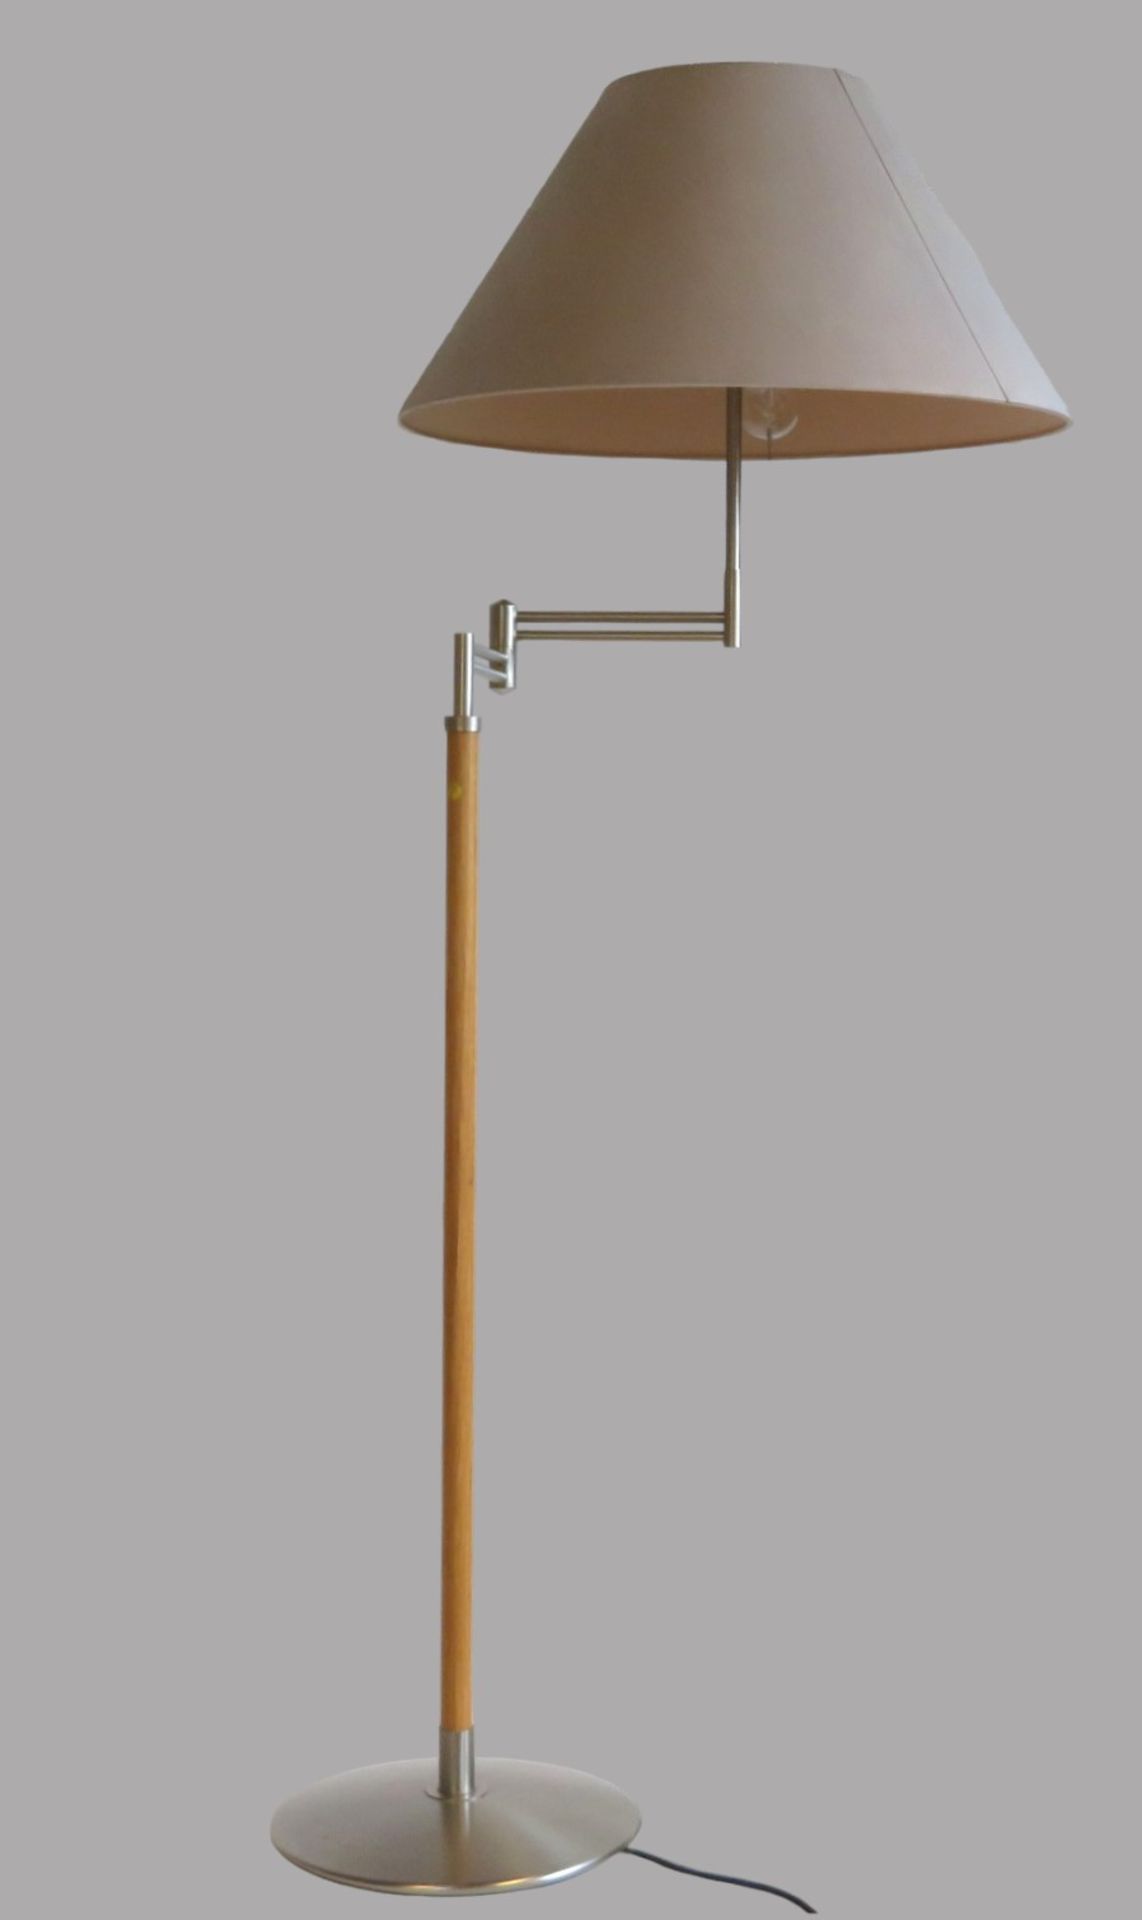 Designer Stehlampe, furnierter Standfuß, h 144 cm, d 56 cm.